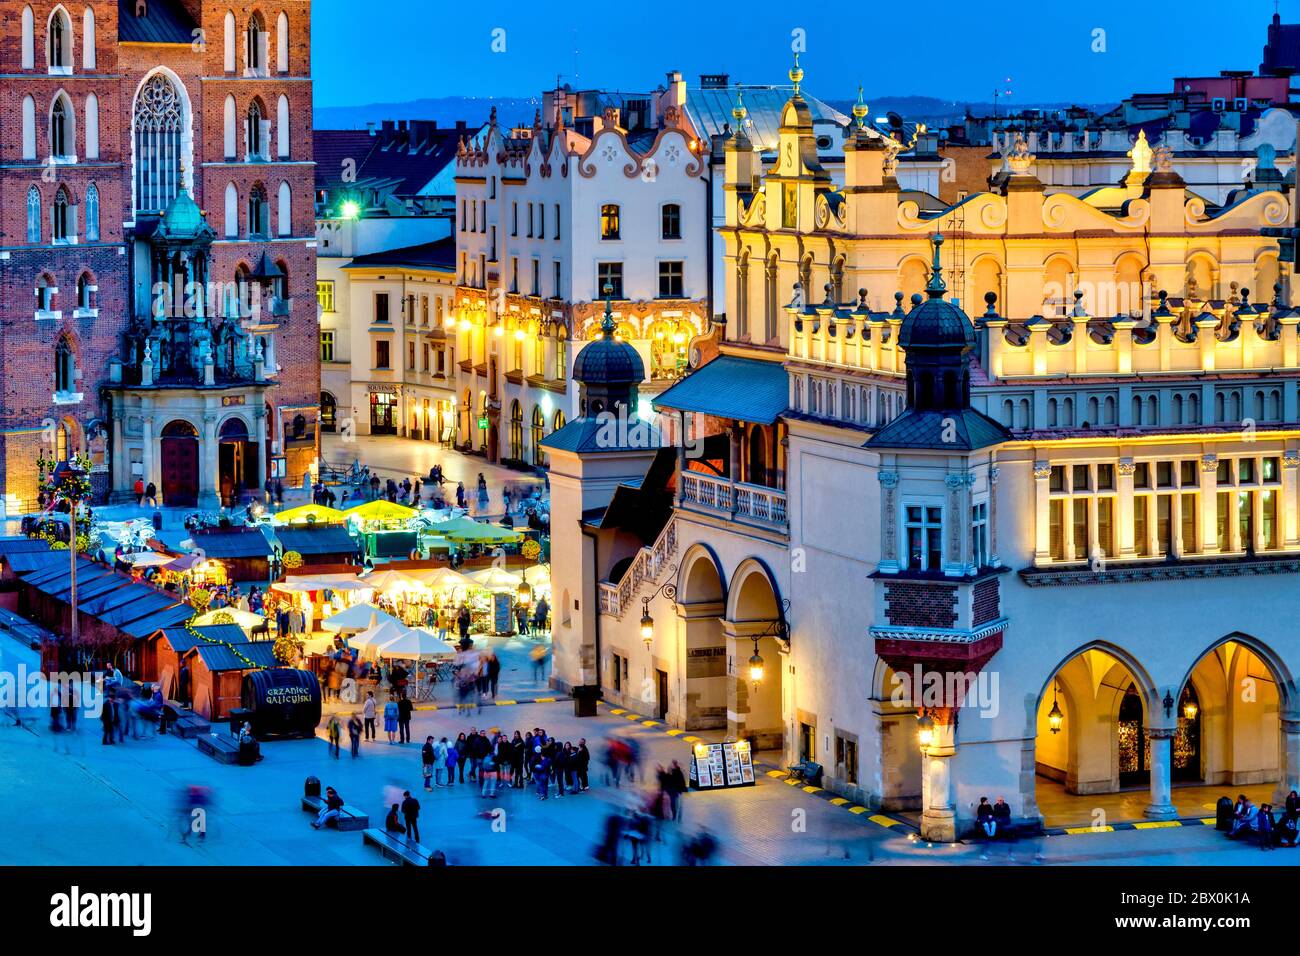 Market in the Main Square, Krakow, Poland Stock Photo